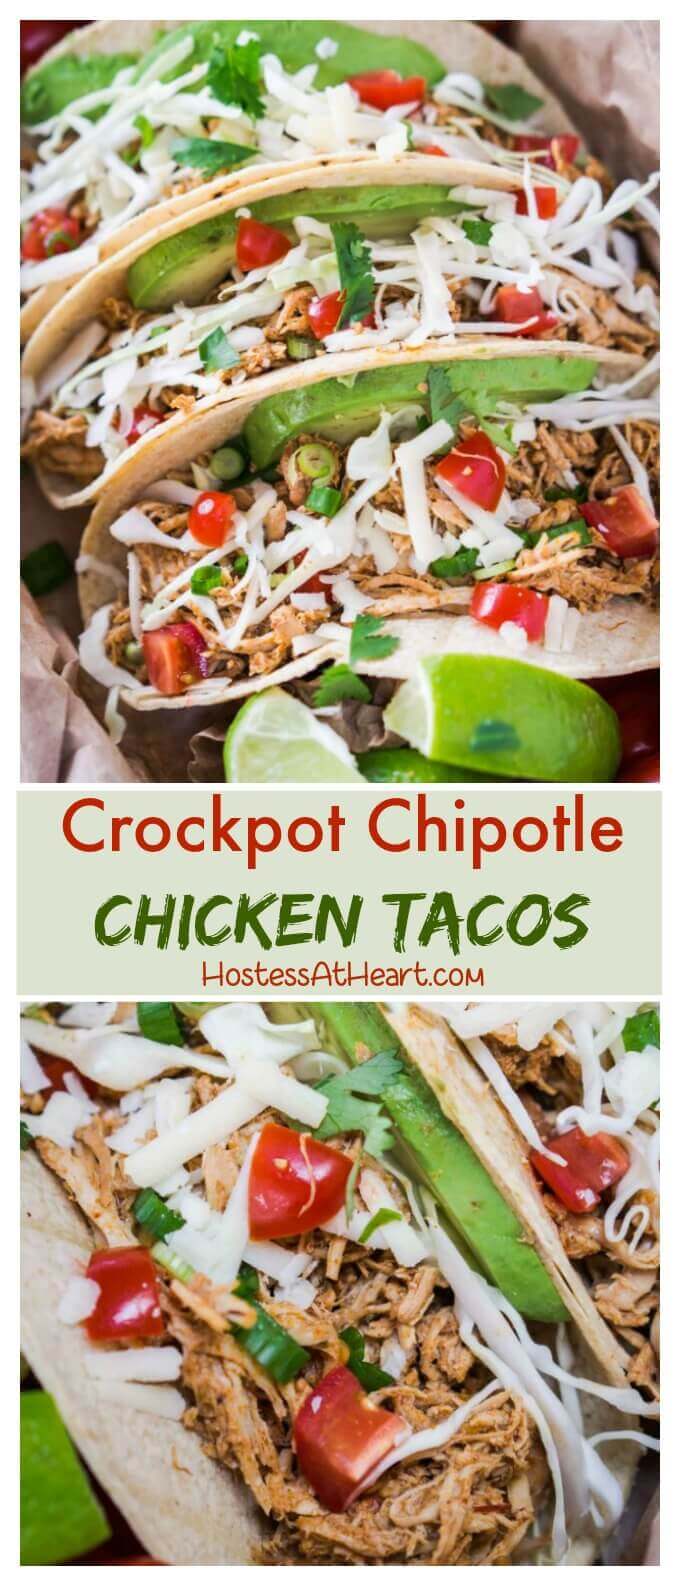 Crockpot Chipotle Chicken Tacos Recipe - Hostess At Heart